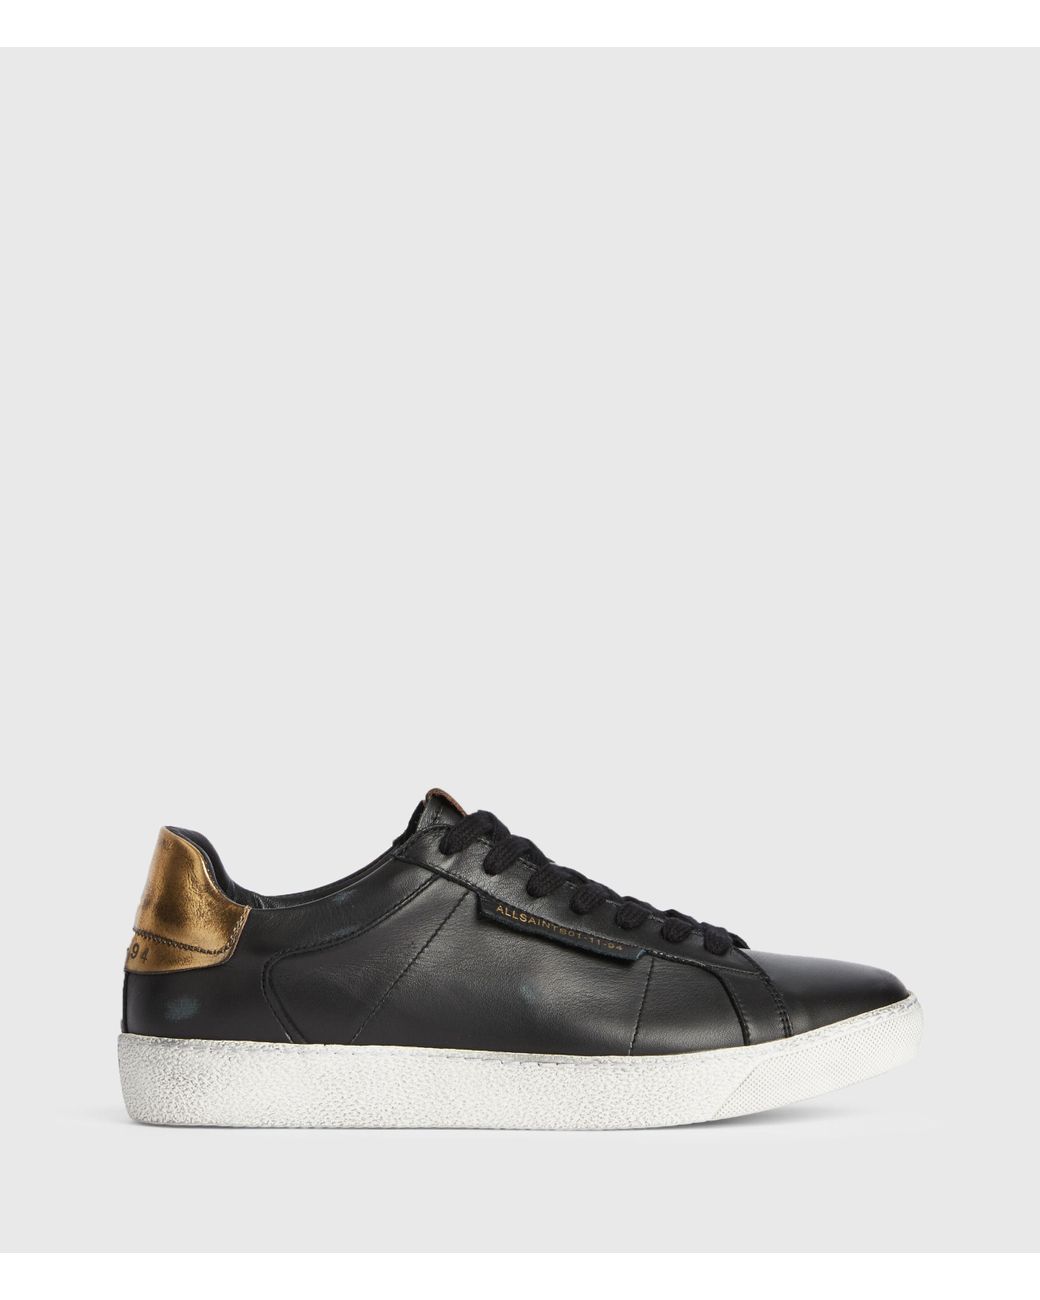 AllSaints Sheer Low Top Leather Sneakers in Black/Gold (Black) - Lyst